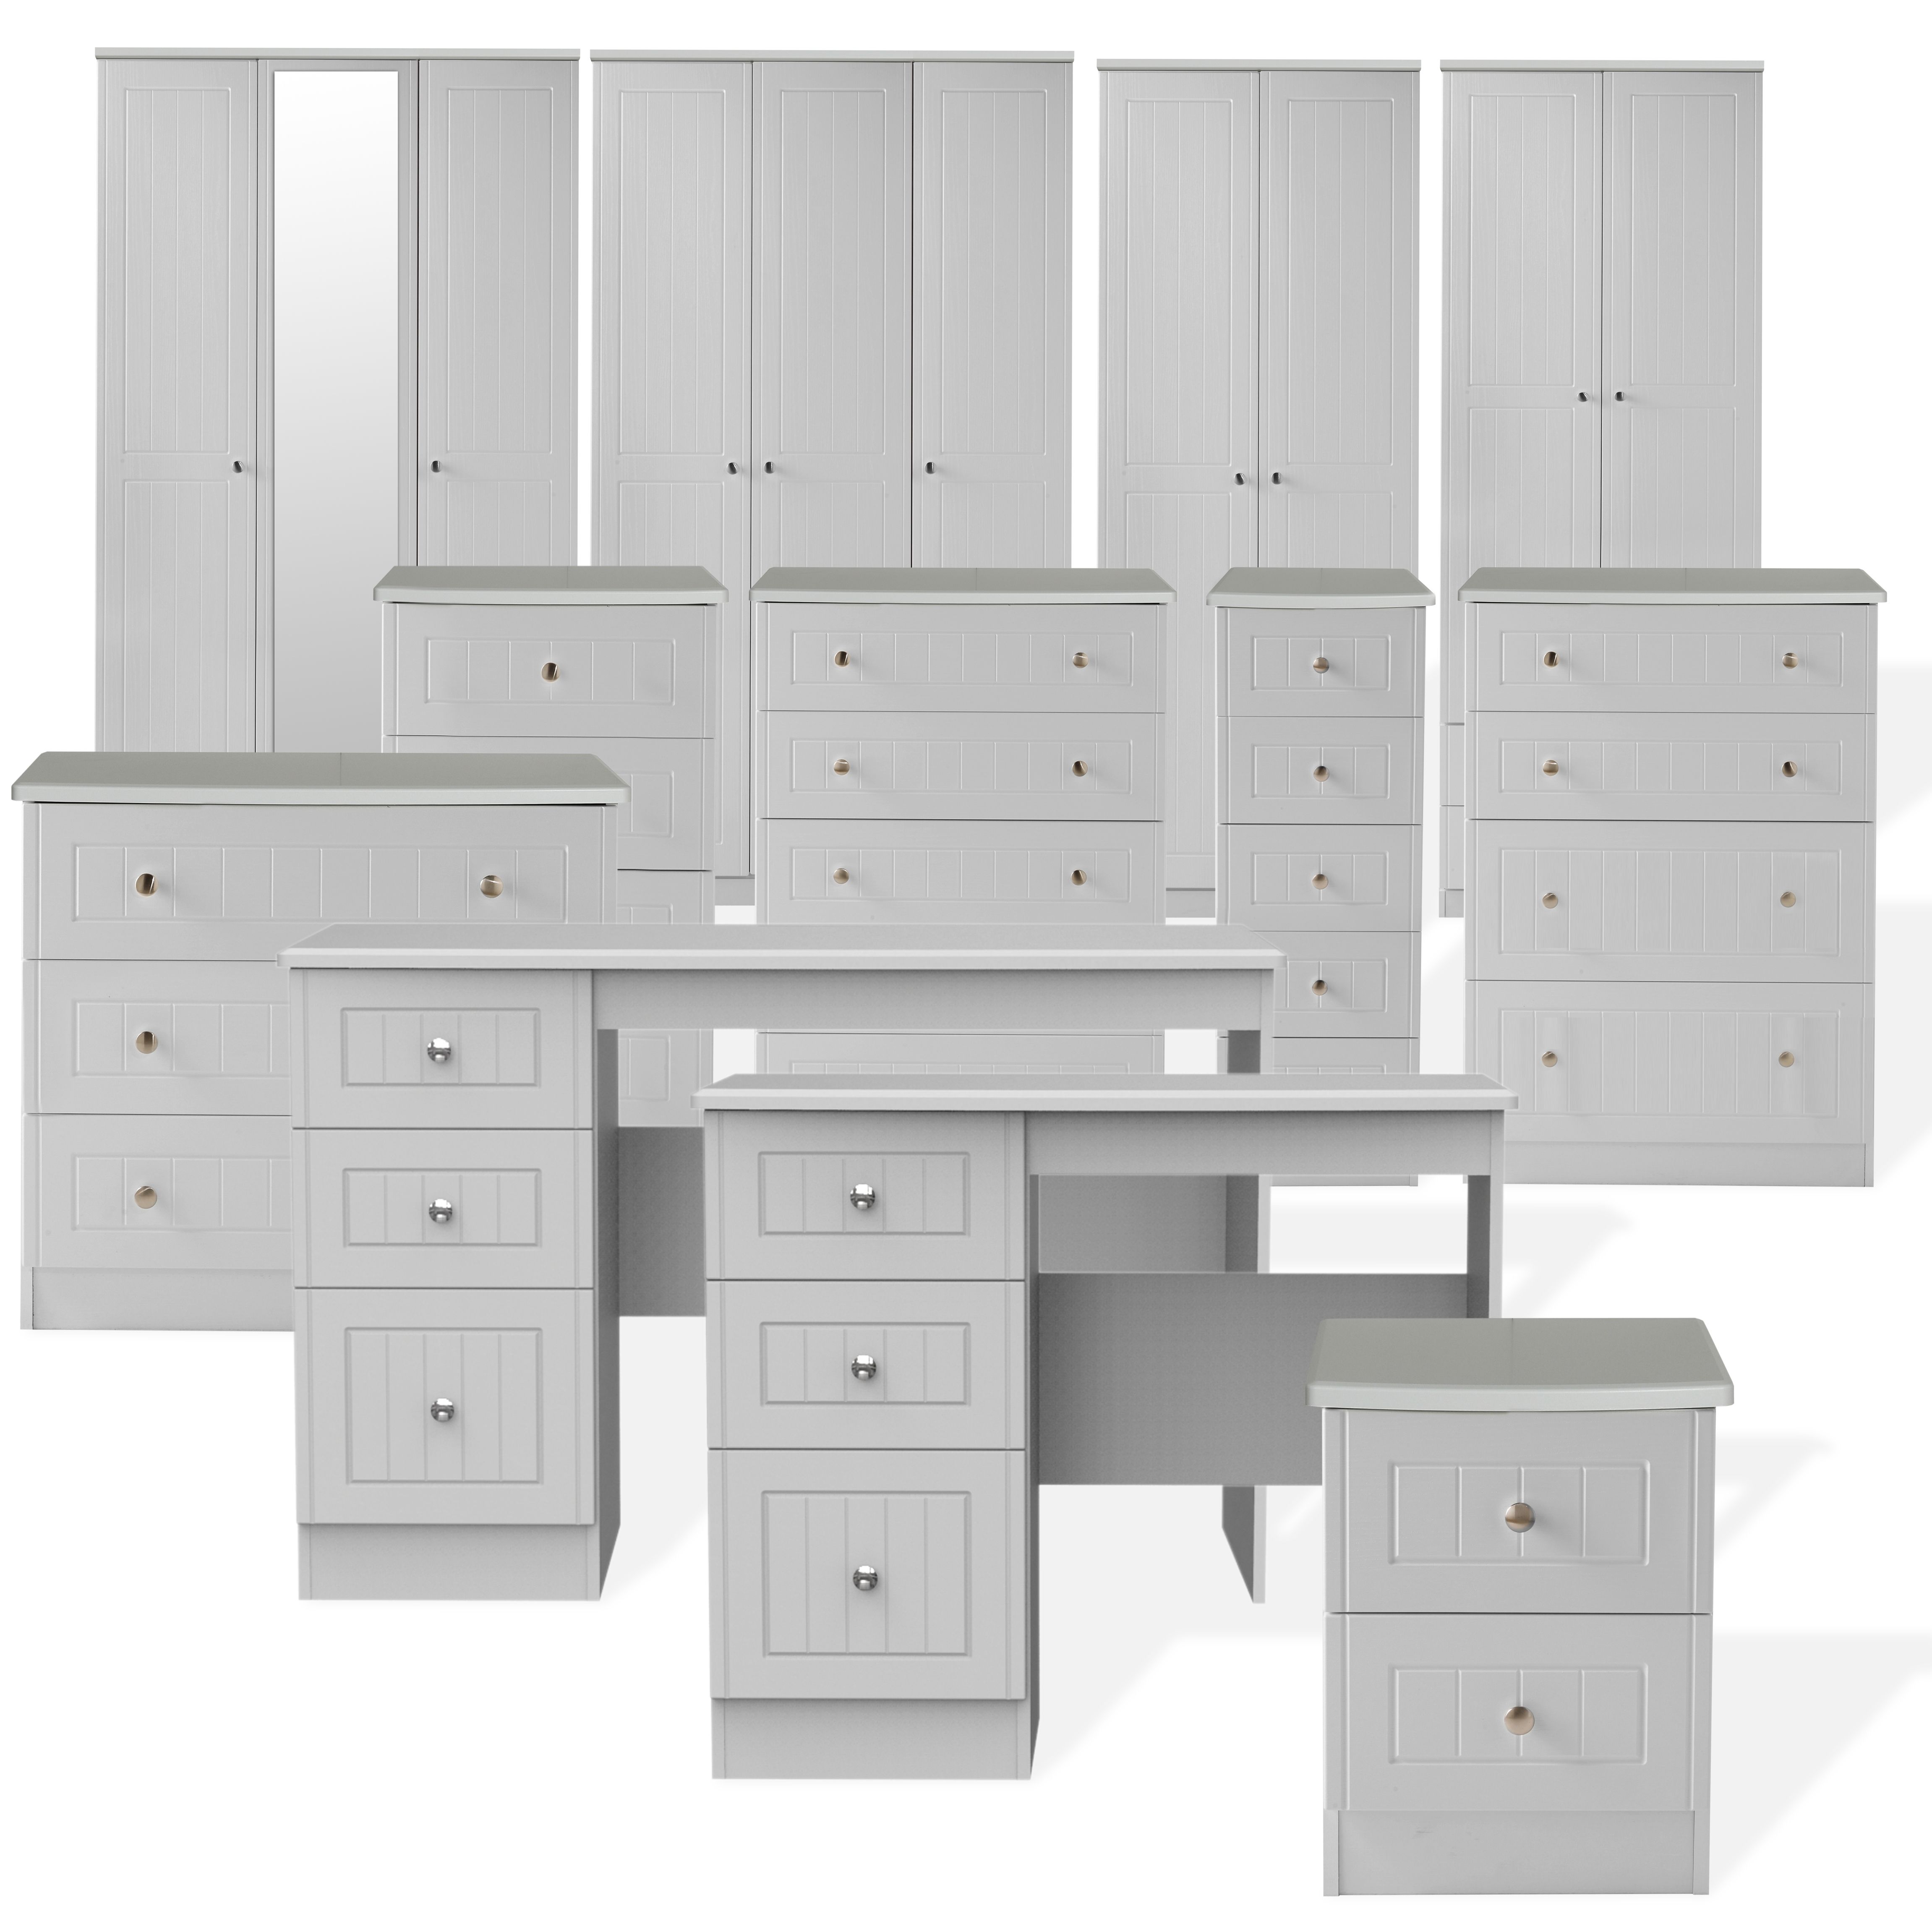 Ready assembled Matt grey Vanity 3 drawer Desk (H)795mm (W)415mm (D)415mm